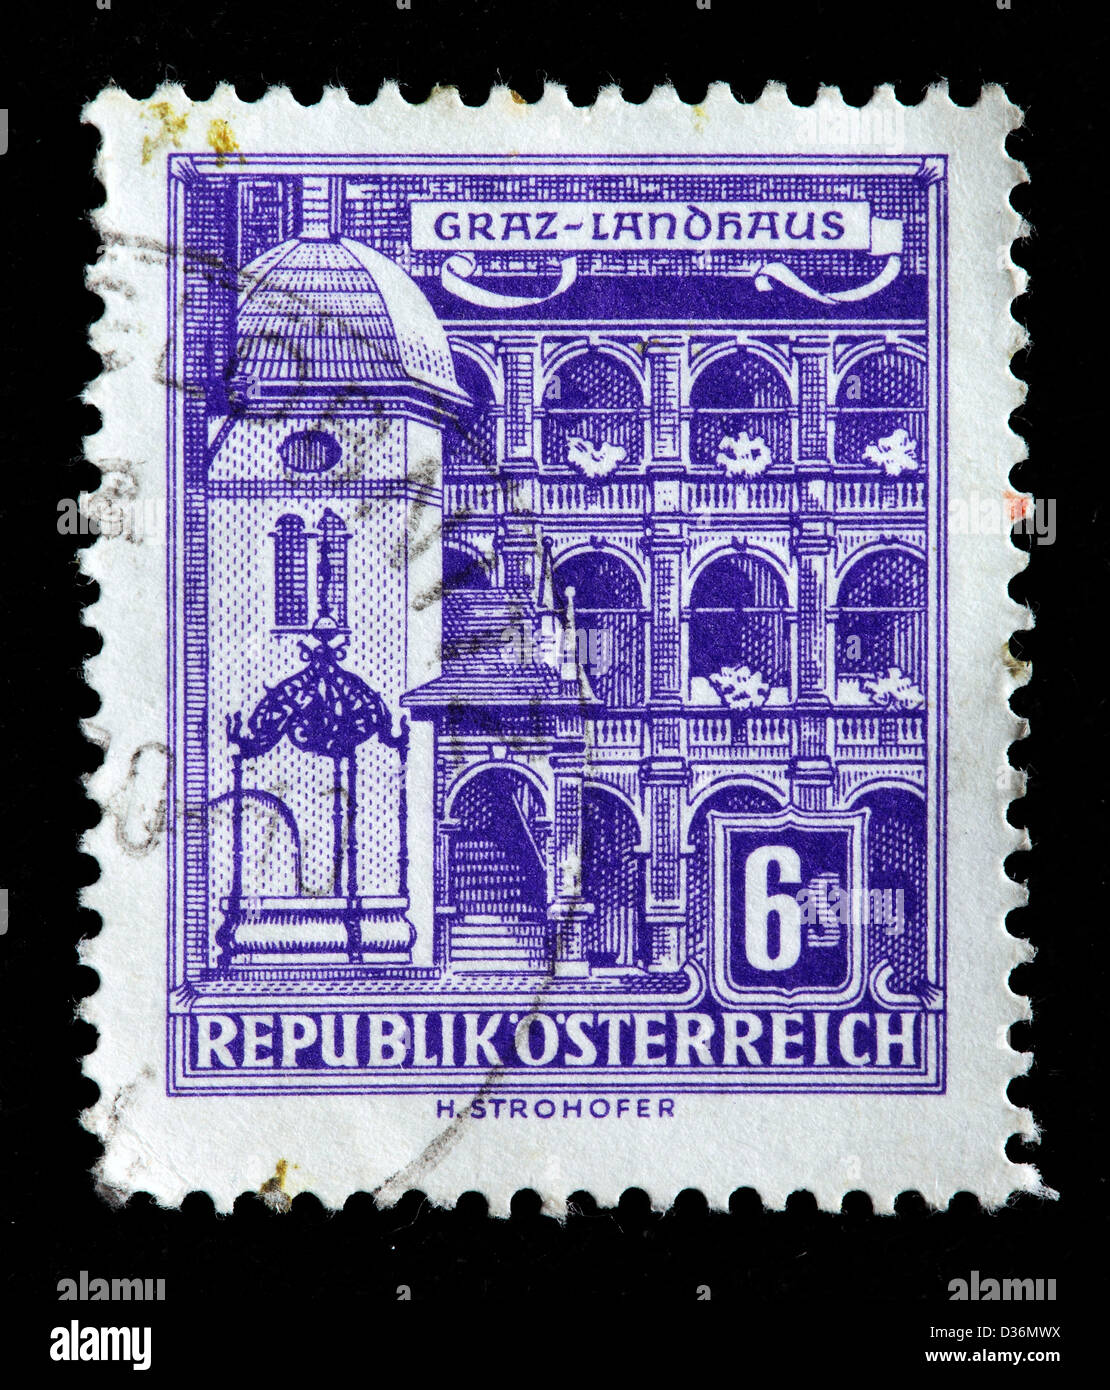 Graz, Landhaus, postage stamp, Austria, 1957 Stock Photo